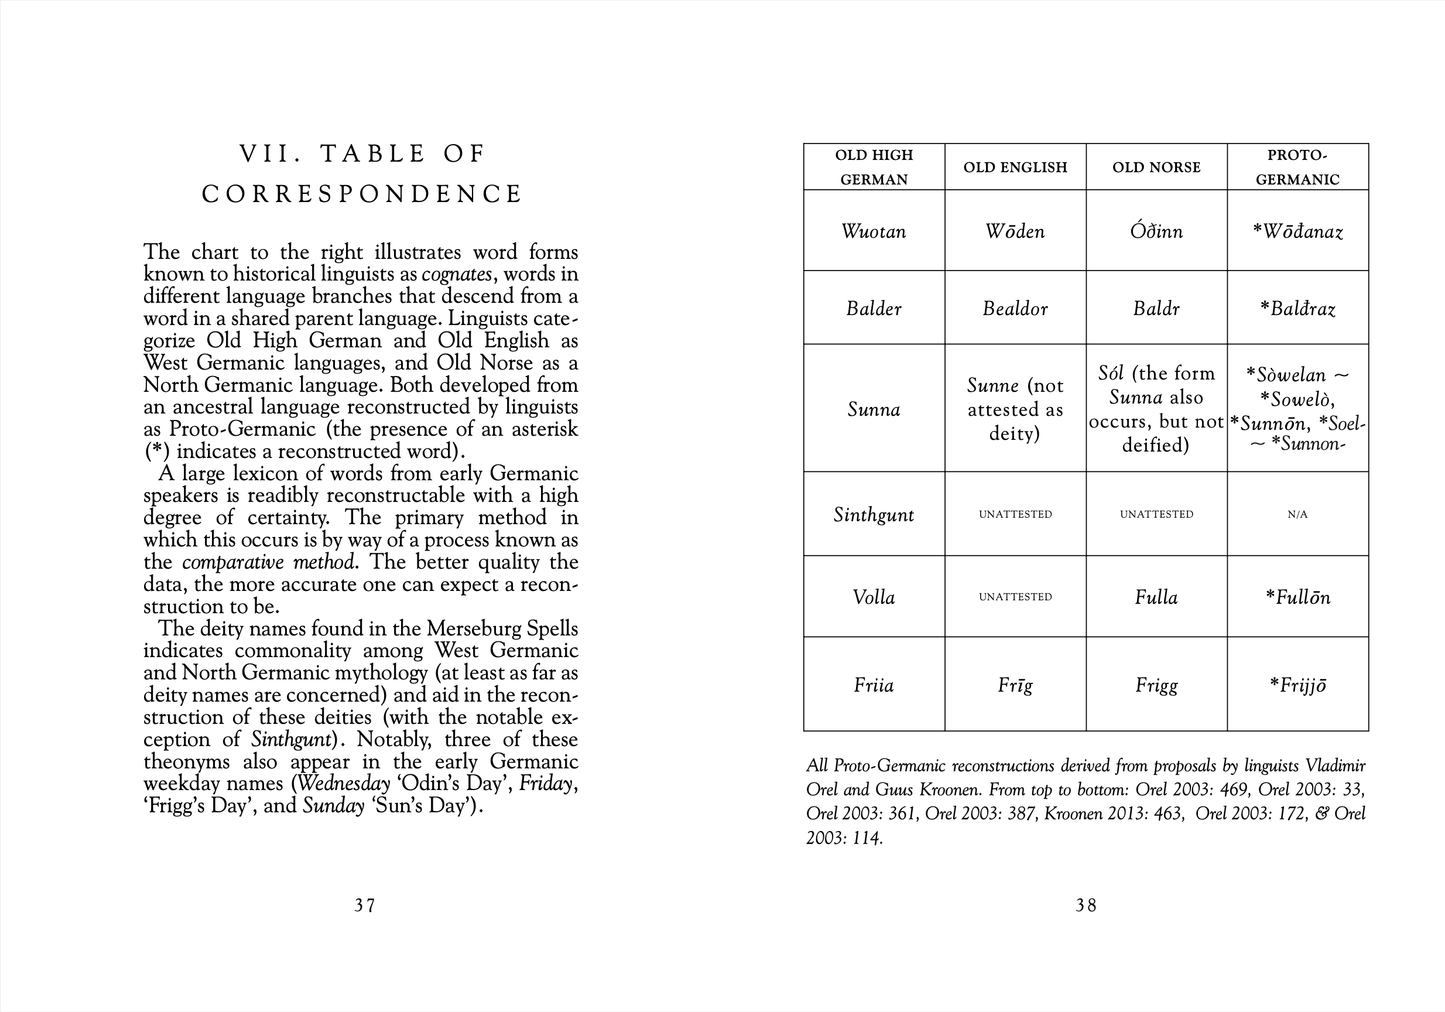 The Merseburg Spells by J. S. Hopkins